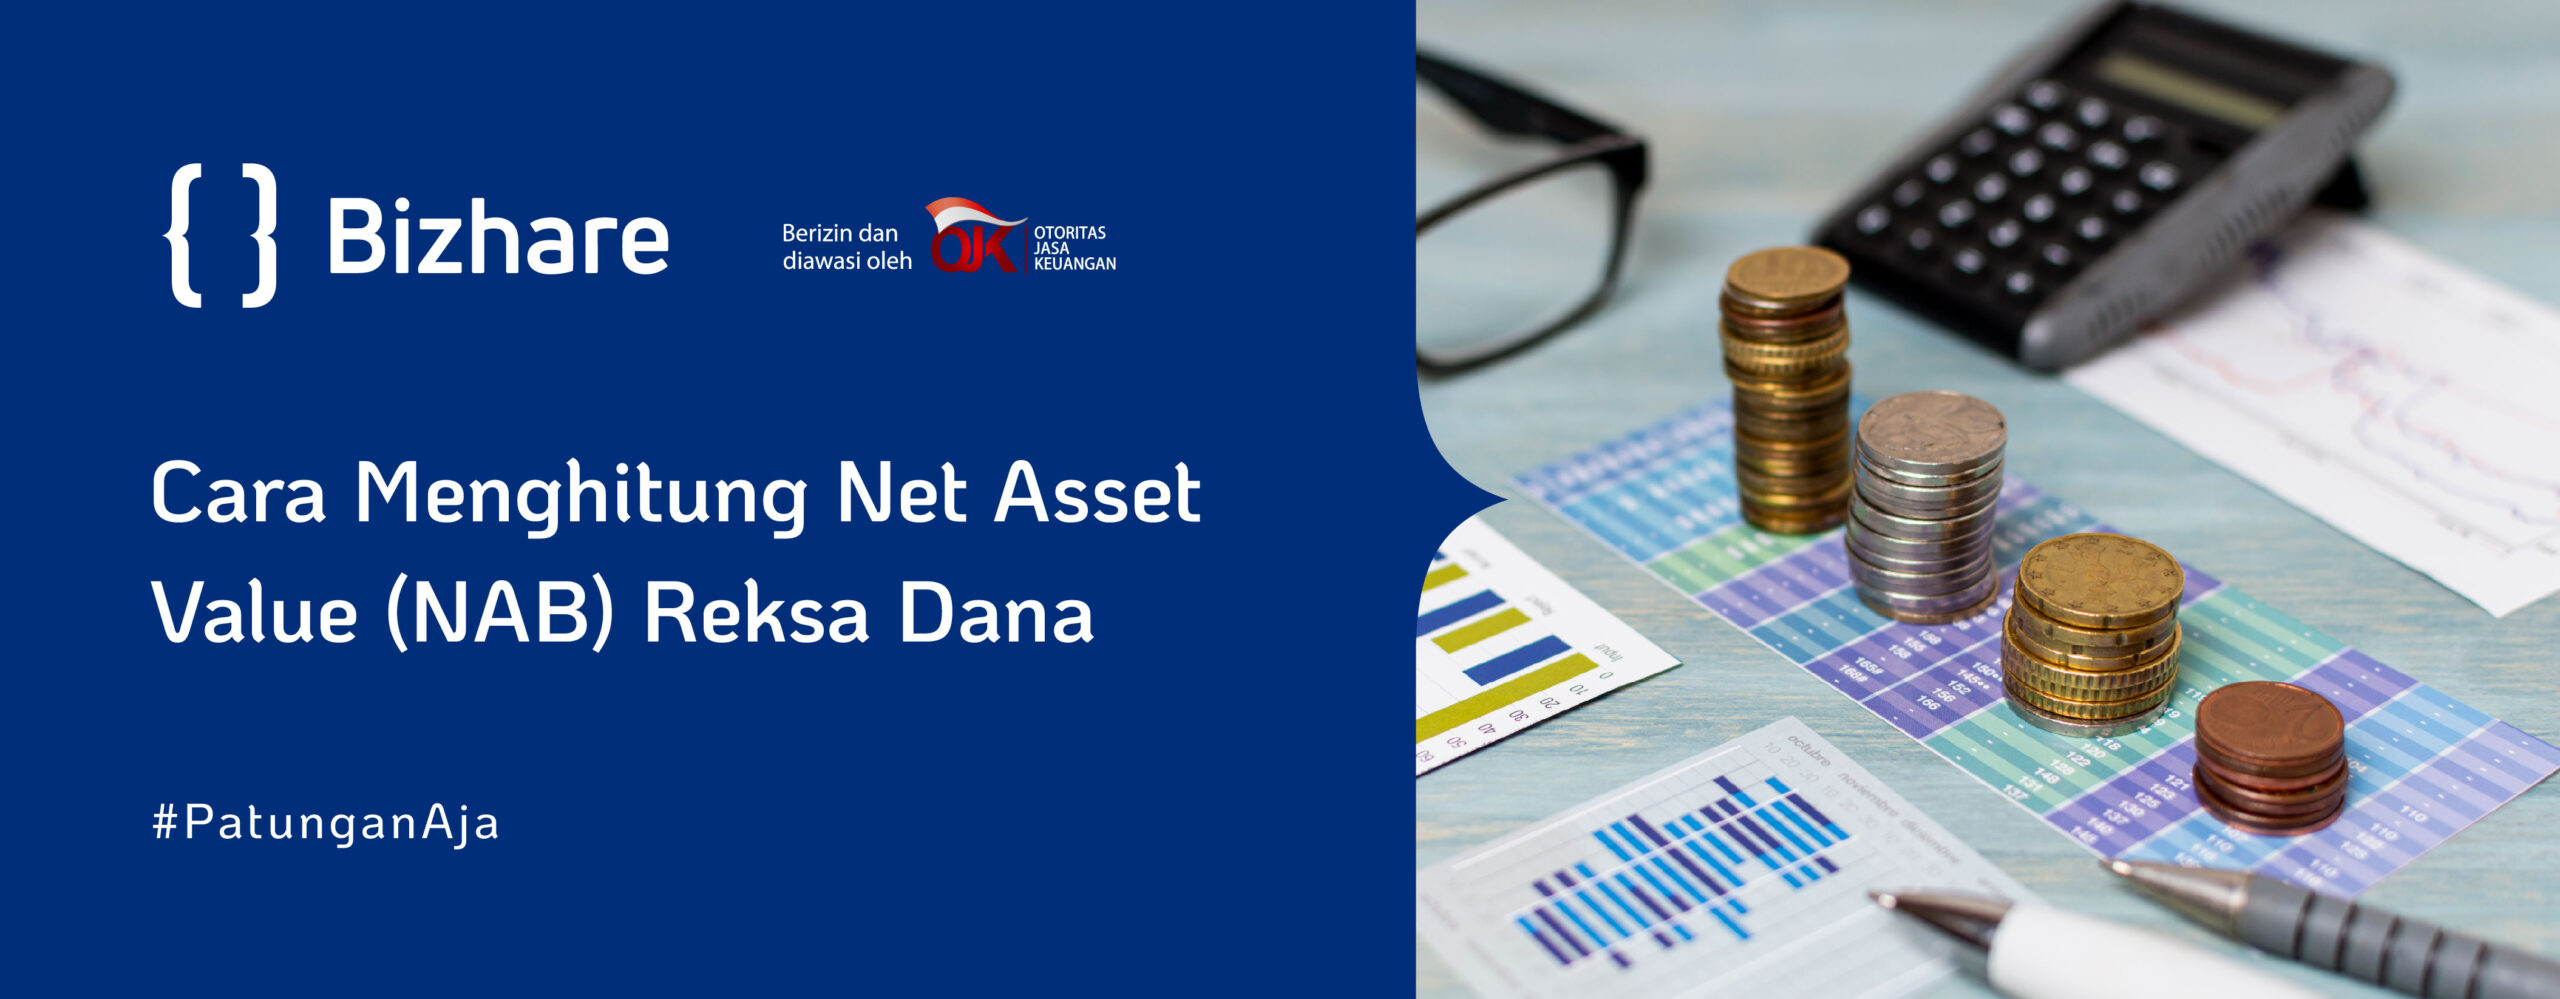 Cara Menghitung Net Asset Value (NAB) Reksa Dana